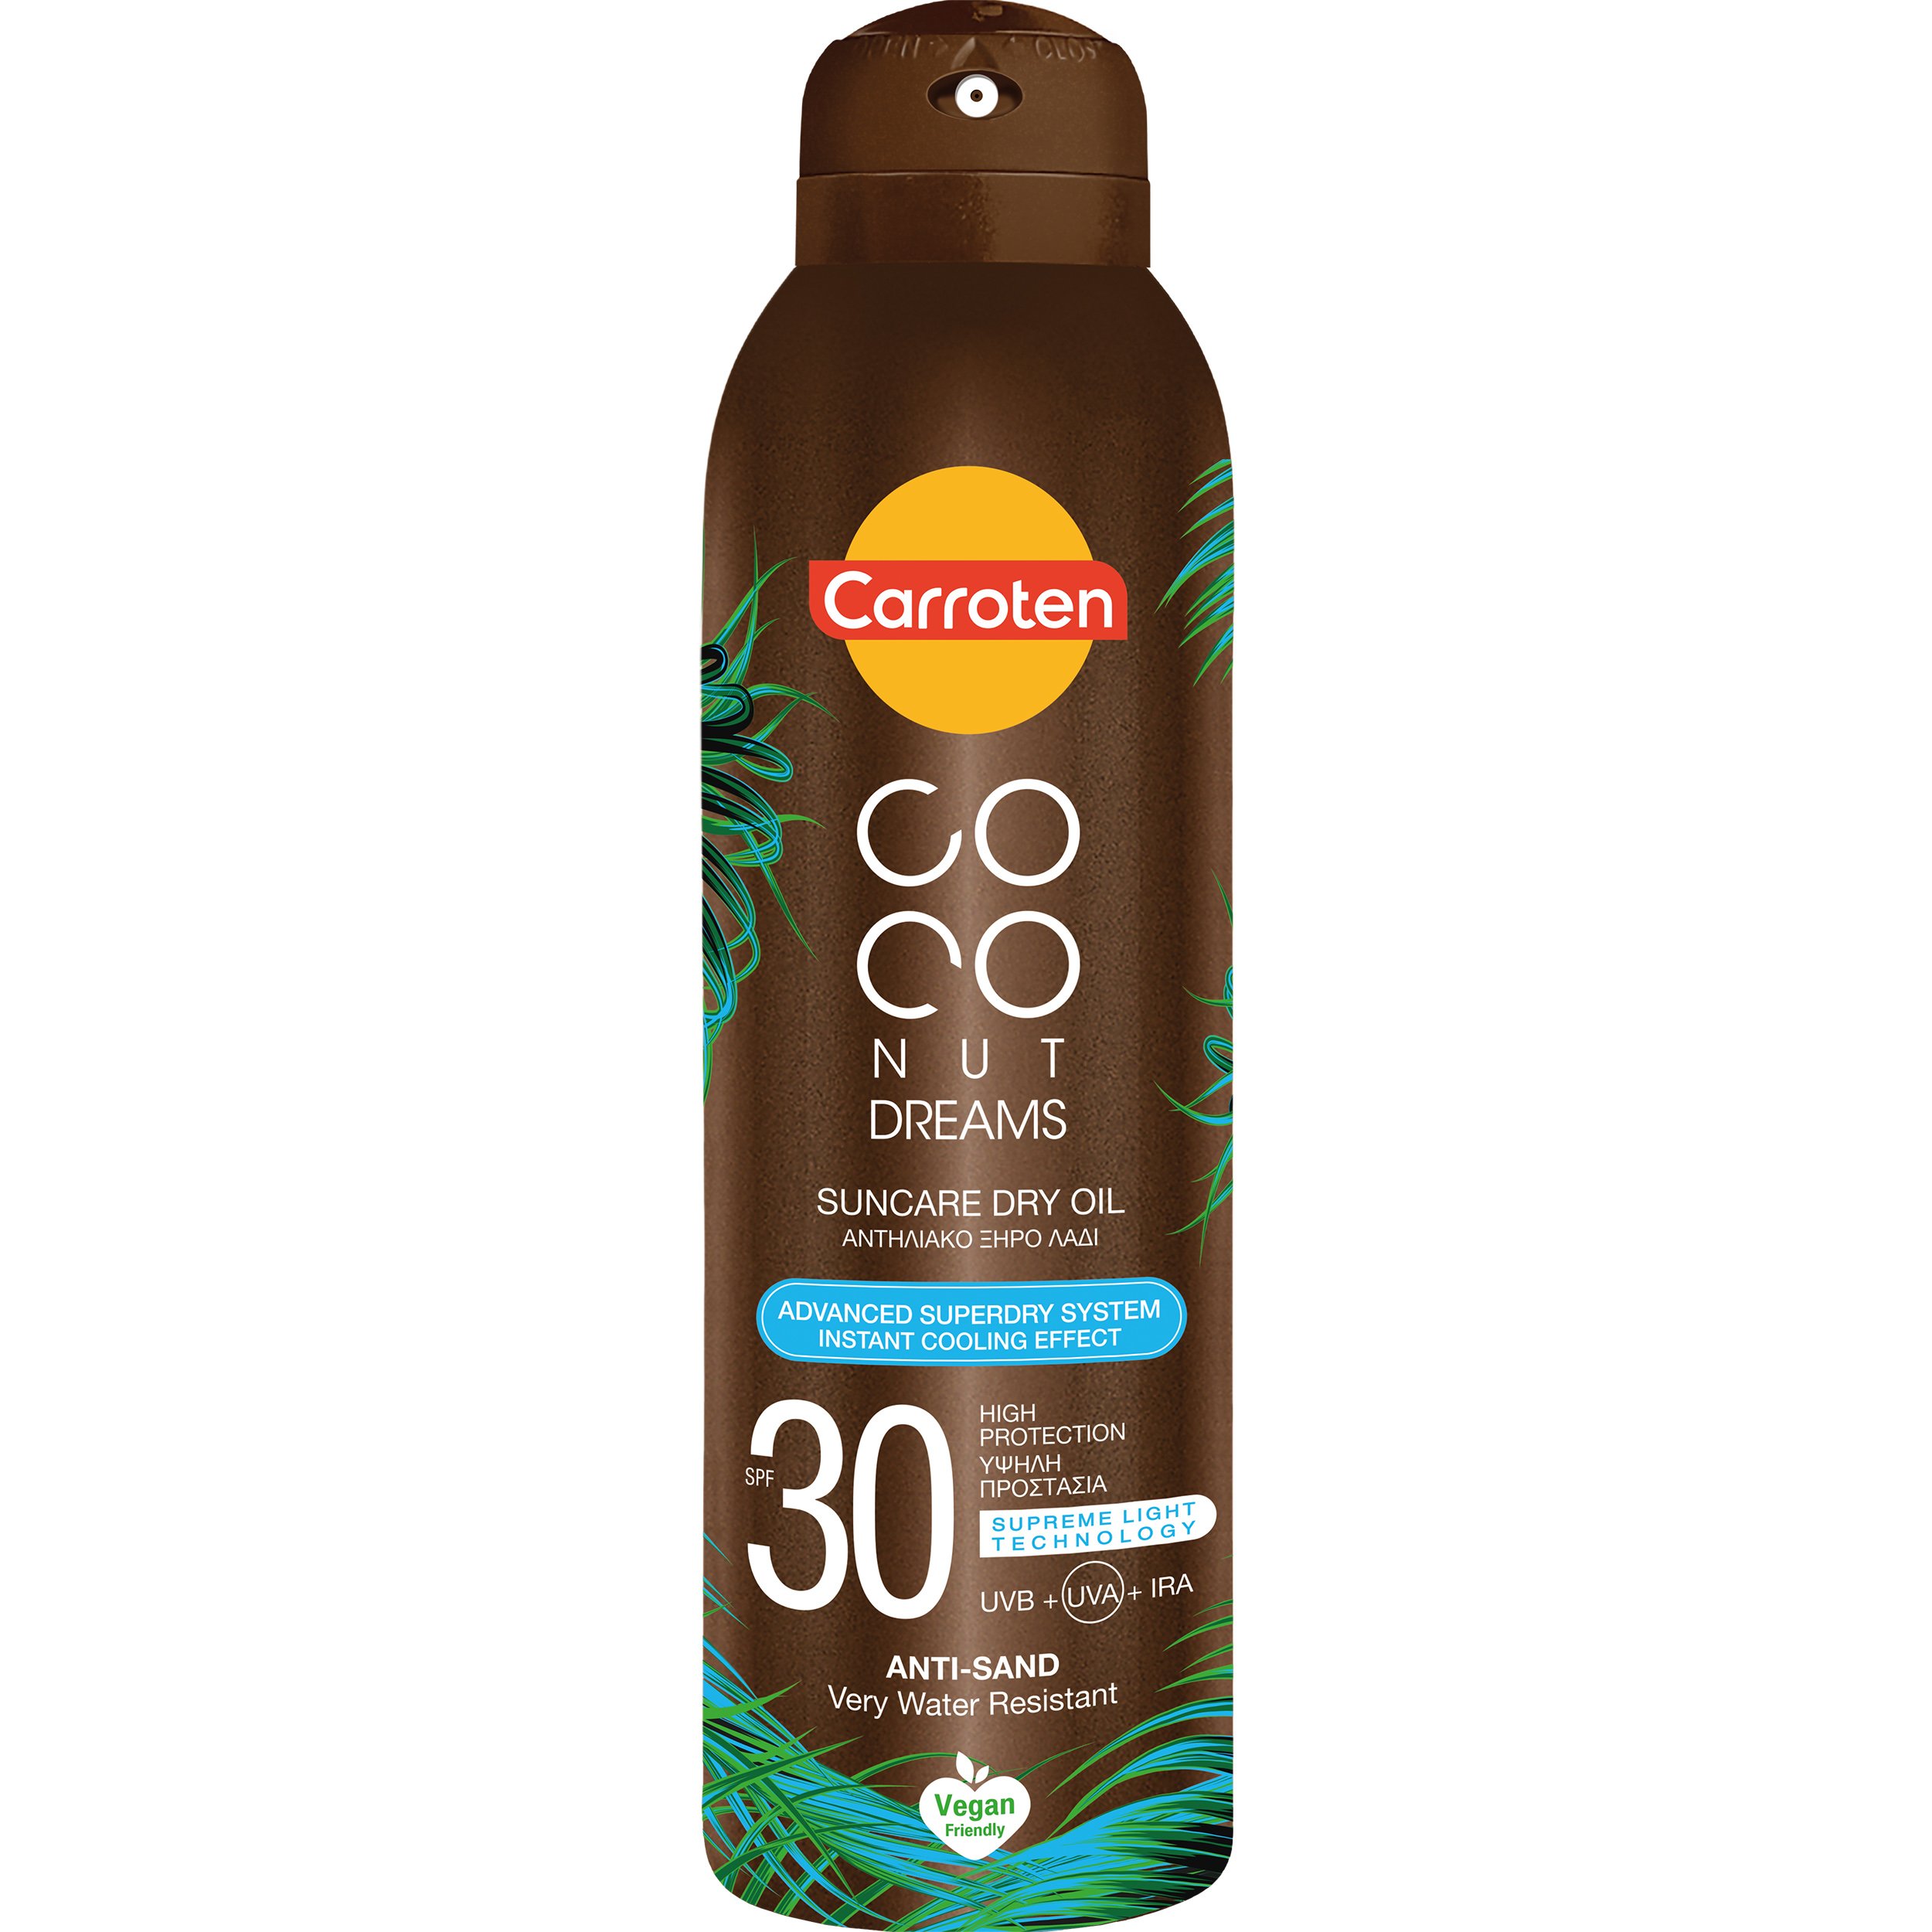 Carroten Carroten Coconut Dreams Suncare Dry Oil Spf30 Αντηλιακό Ξηρό Λάδι Υψηλής Προστασίας σε Spray 150ml